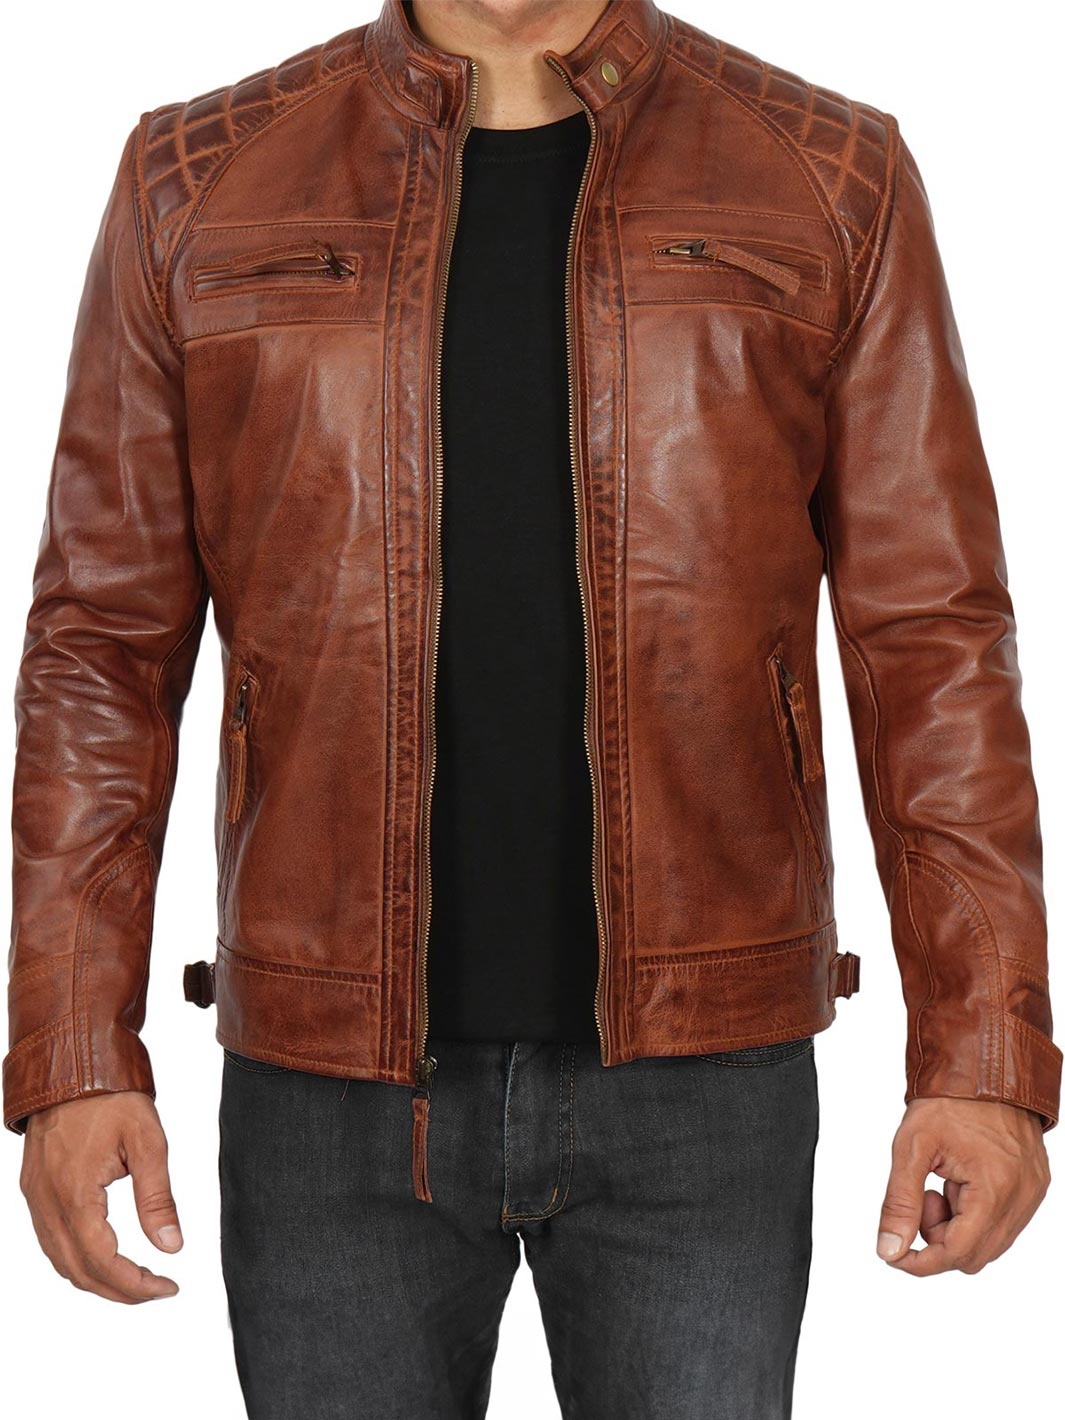 Mens Brown Leather jacket